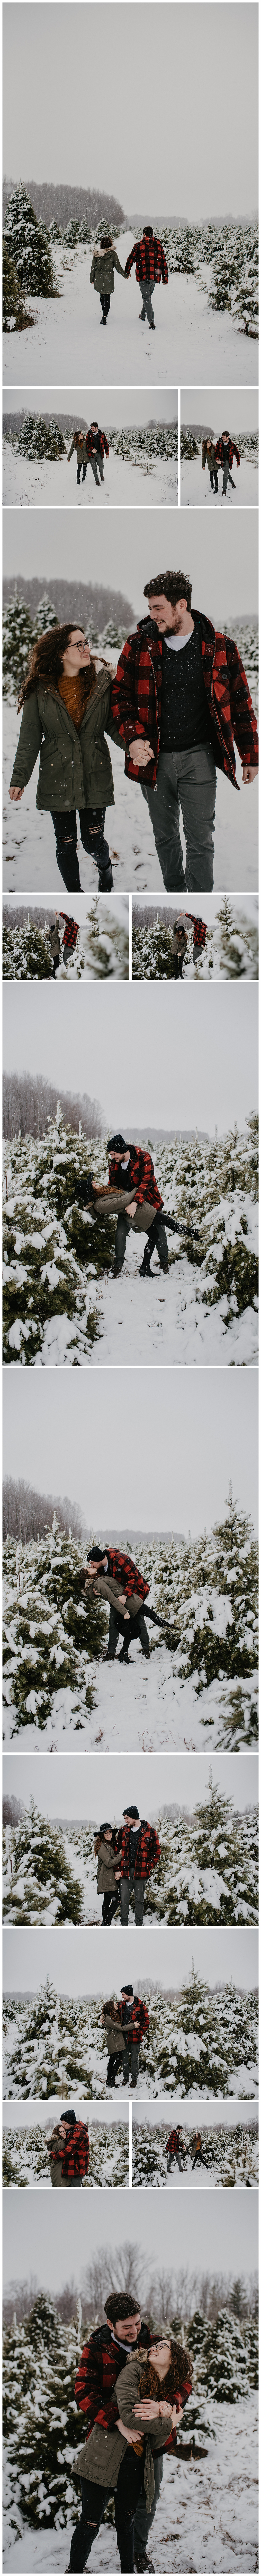 INTERY SNOW COUPLES SESSION | PHIL + KAYLA | TOLEDO, OHIO | WEDDING + ELOPEMENT PHOTOGRAPHER